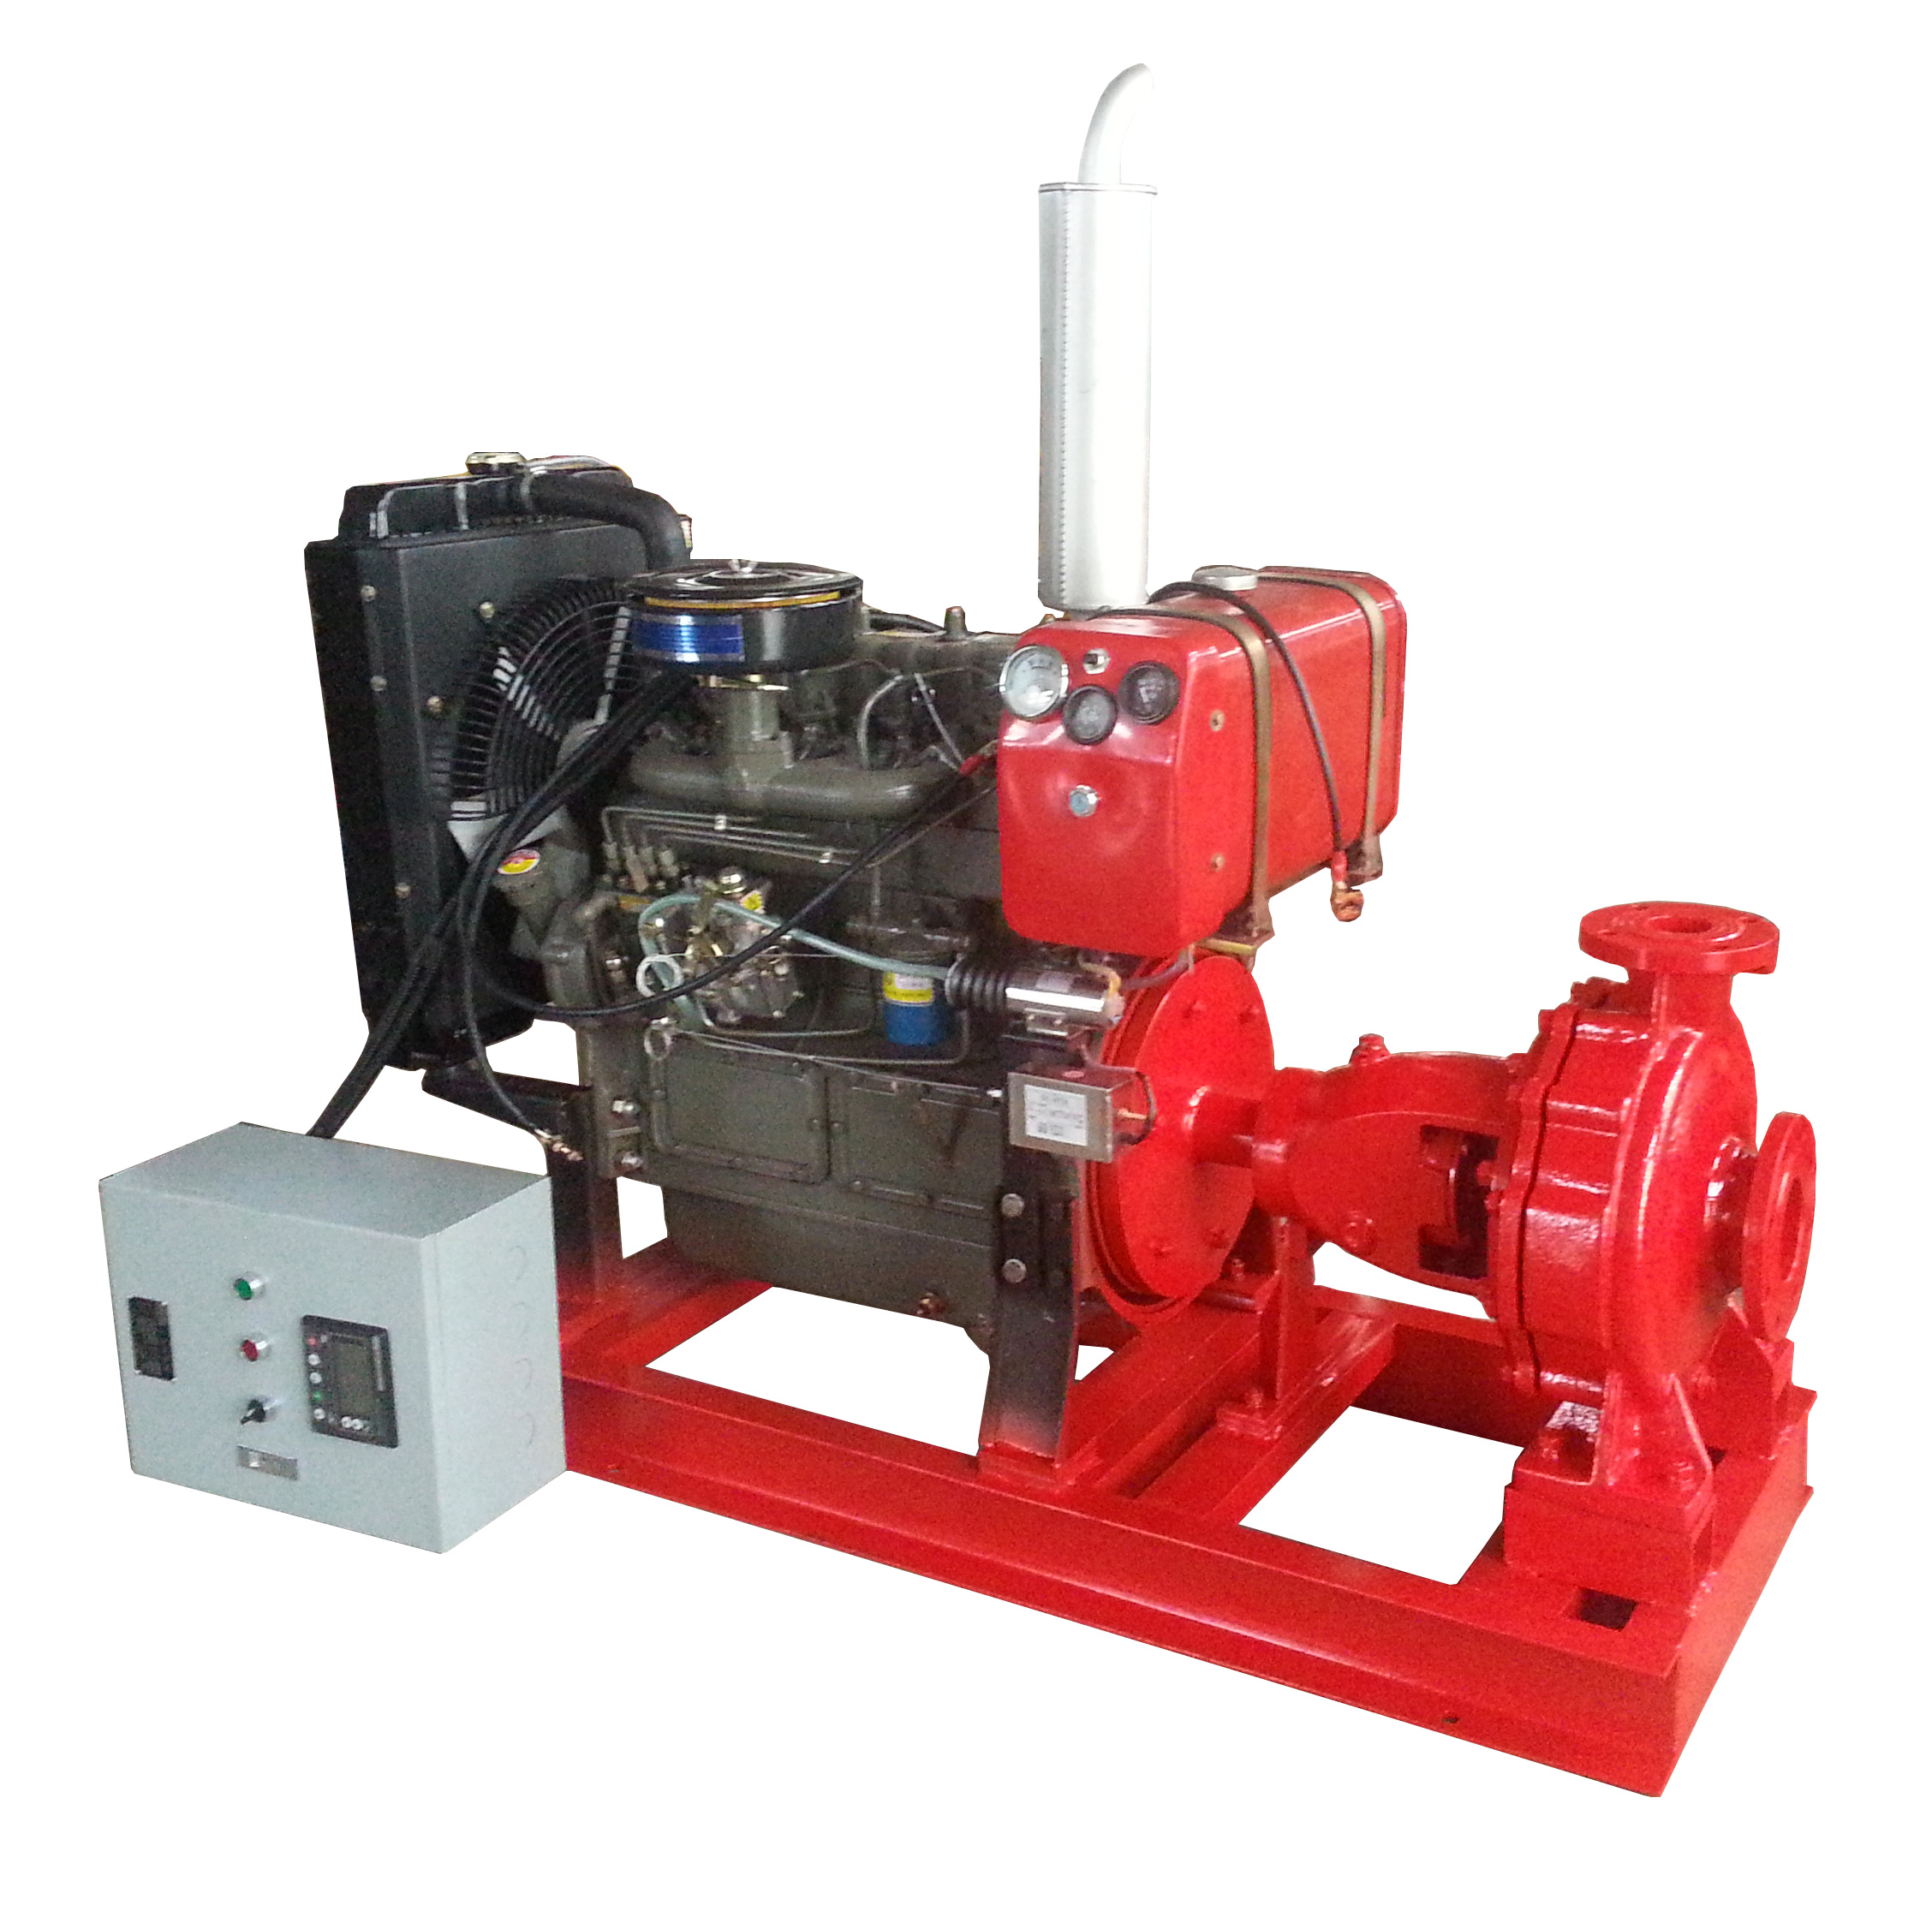 Fire centrifugal pump transfer irrigation end suction diesel water pump